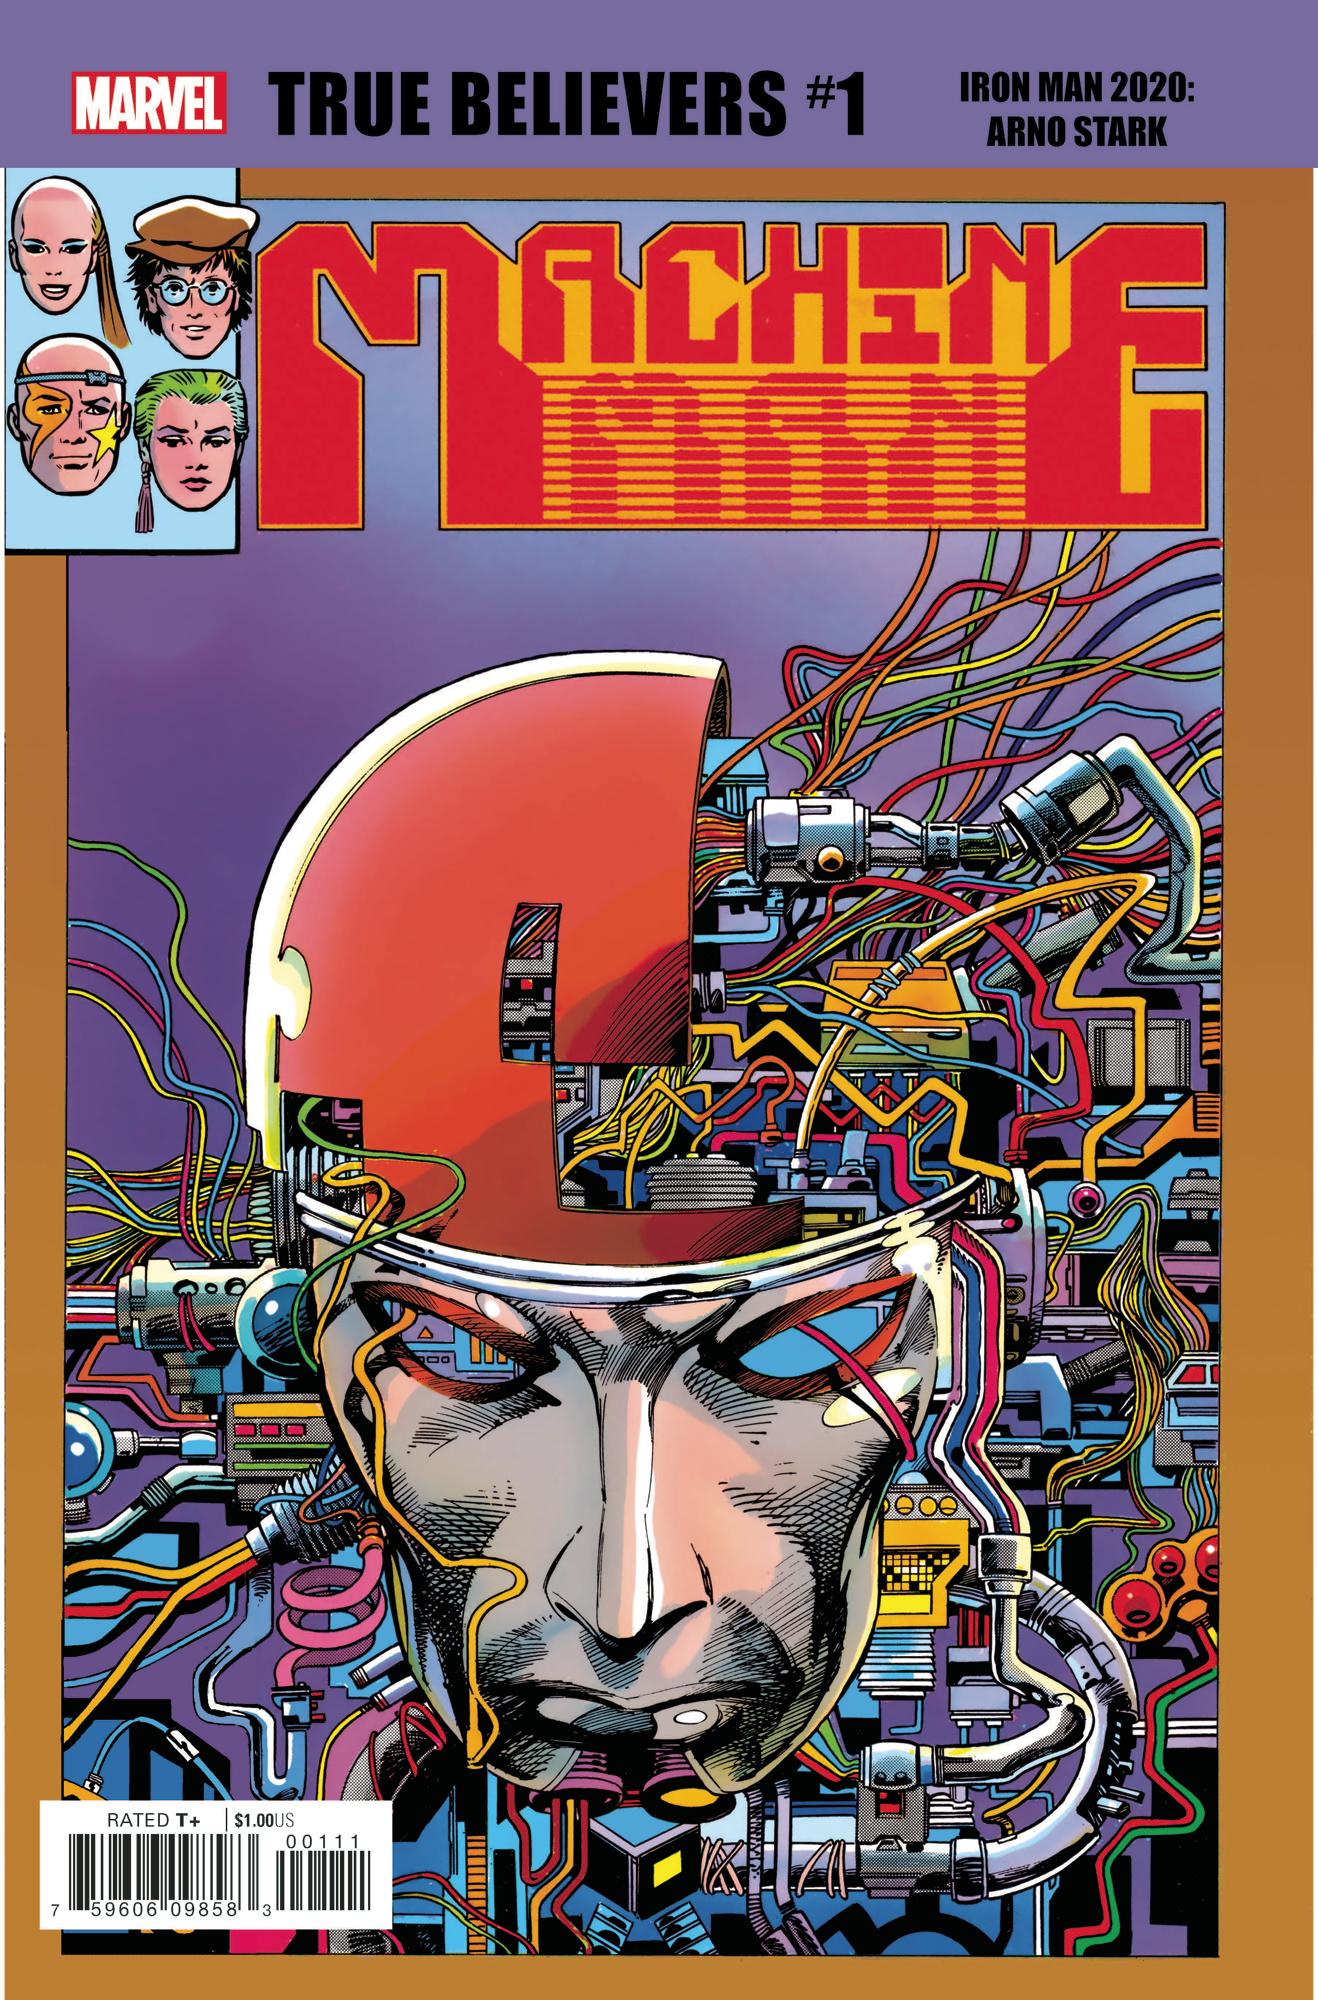 True Believers: Iron Man 2020 - Arno Stark Vol. 1 #1